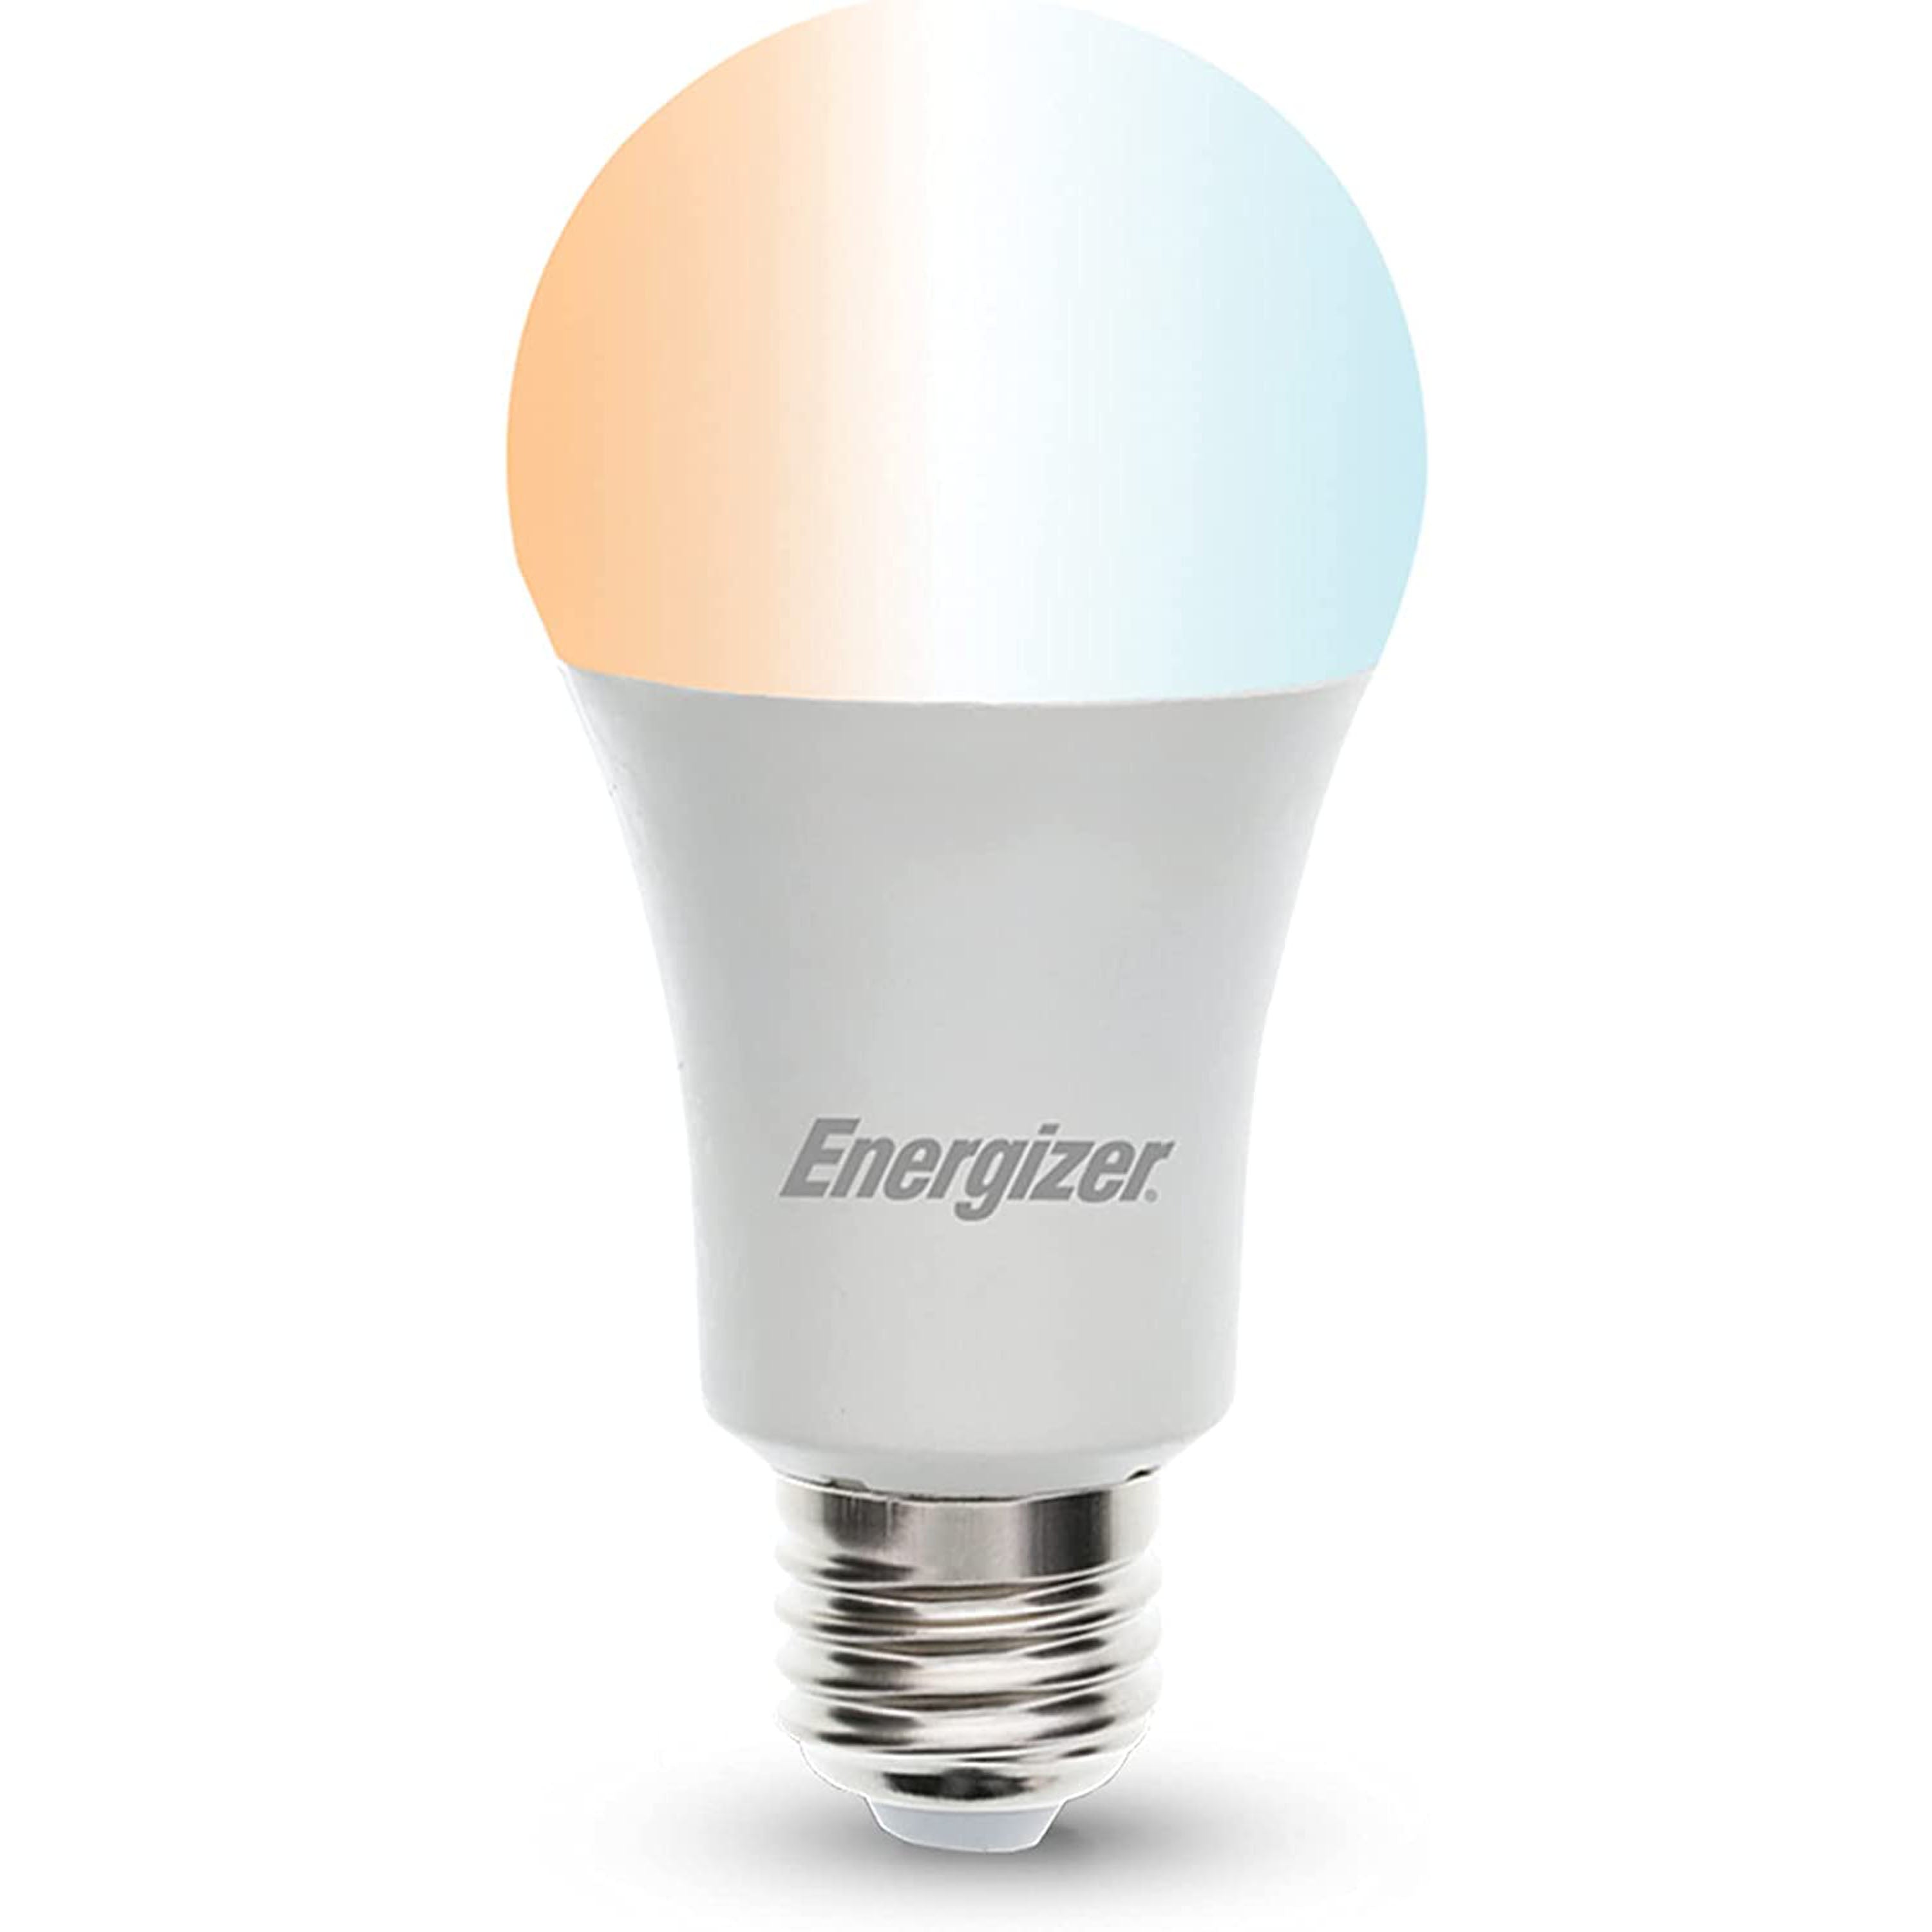 Energizer Smart A19 LED Bulb - RGB and Multi White